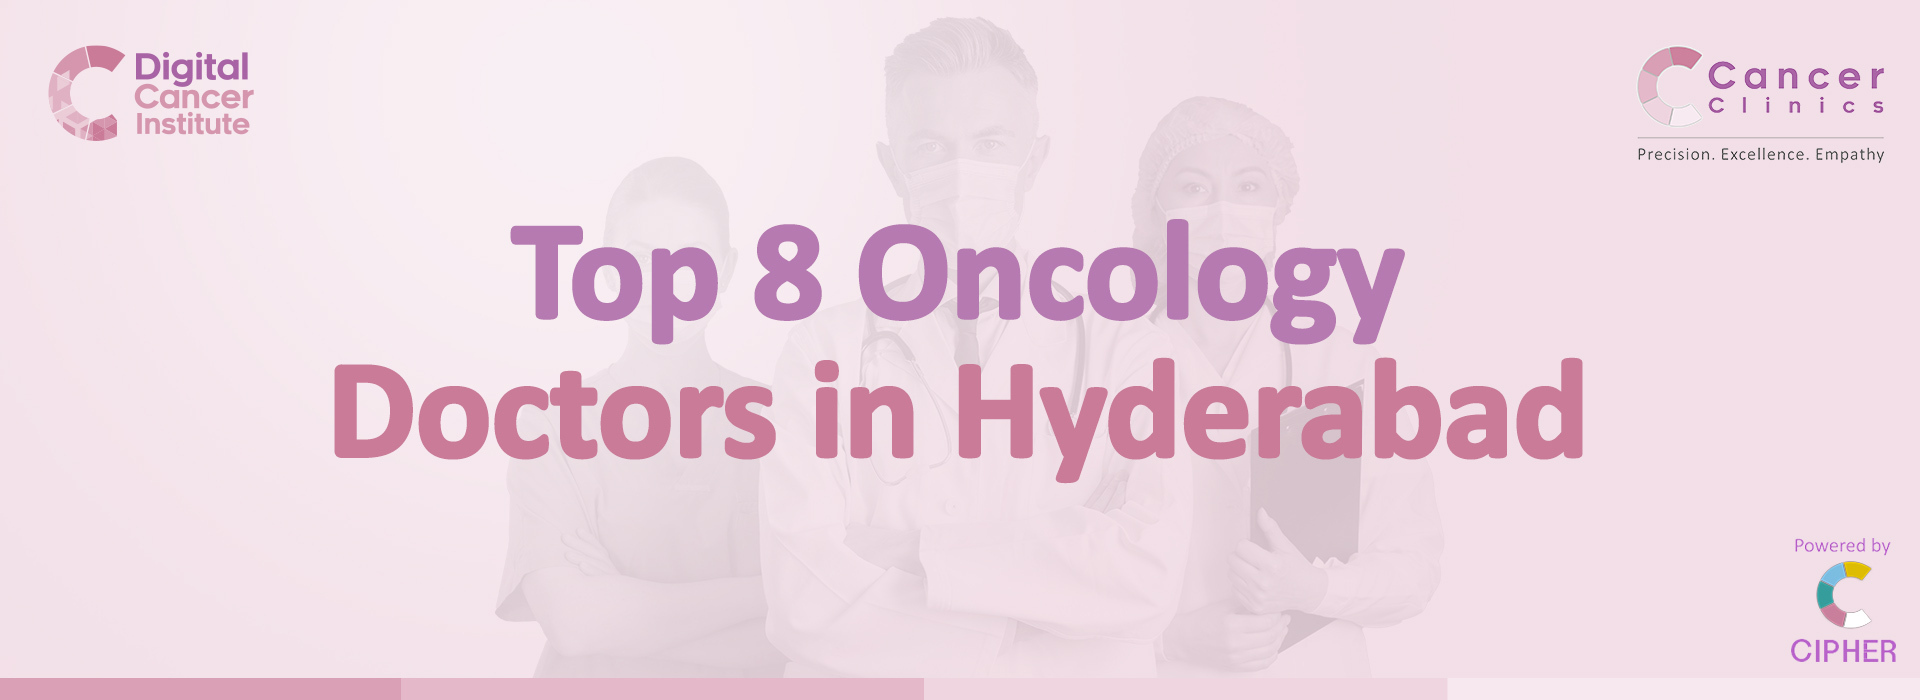 Top 8 Oncology Doctors in Hyderabad